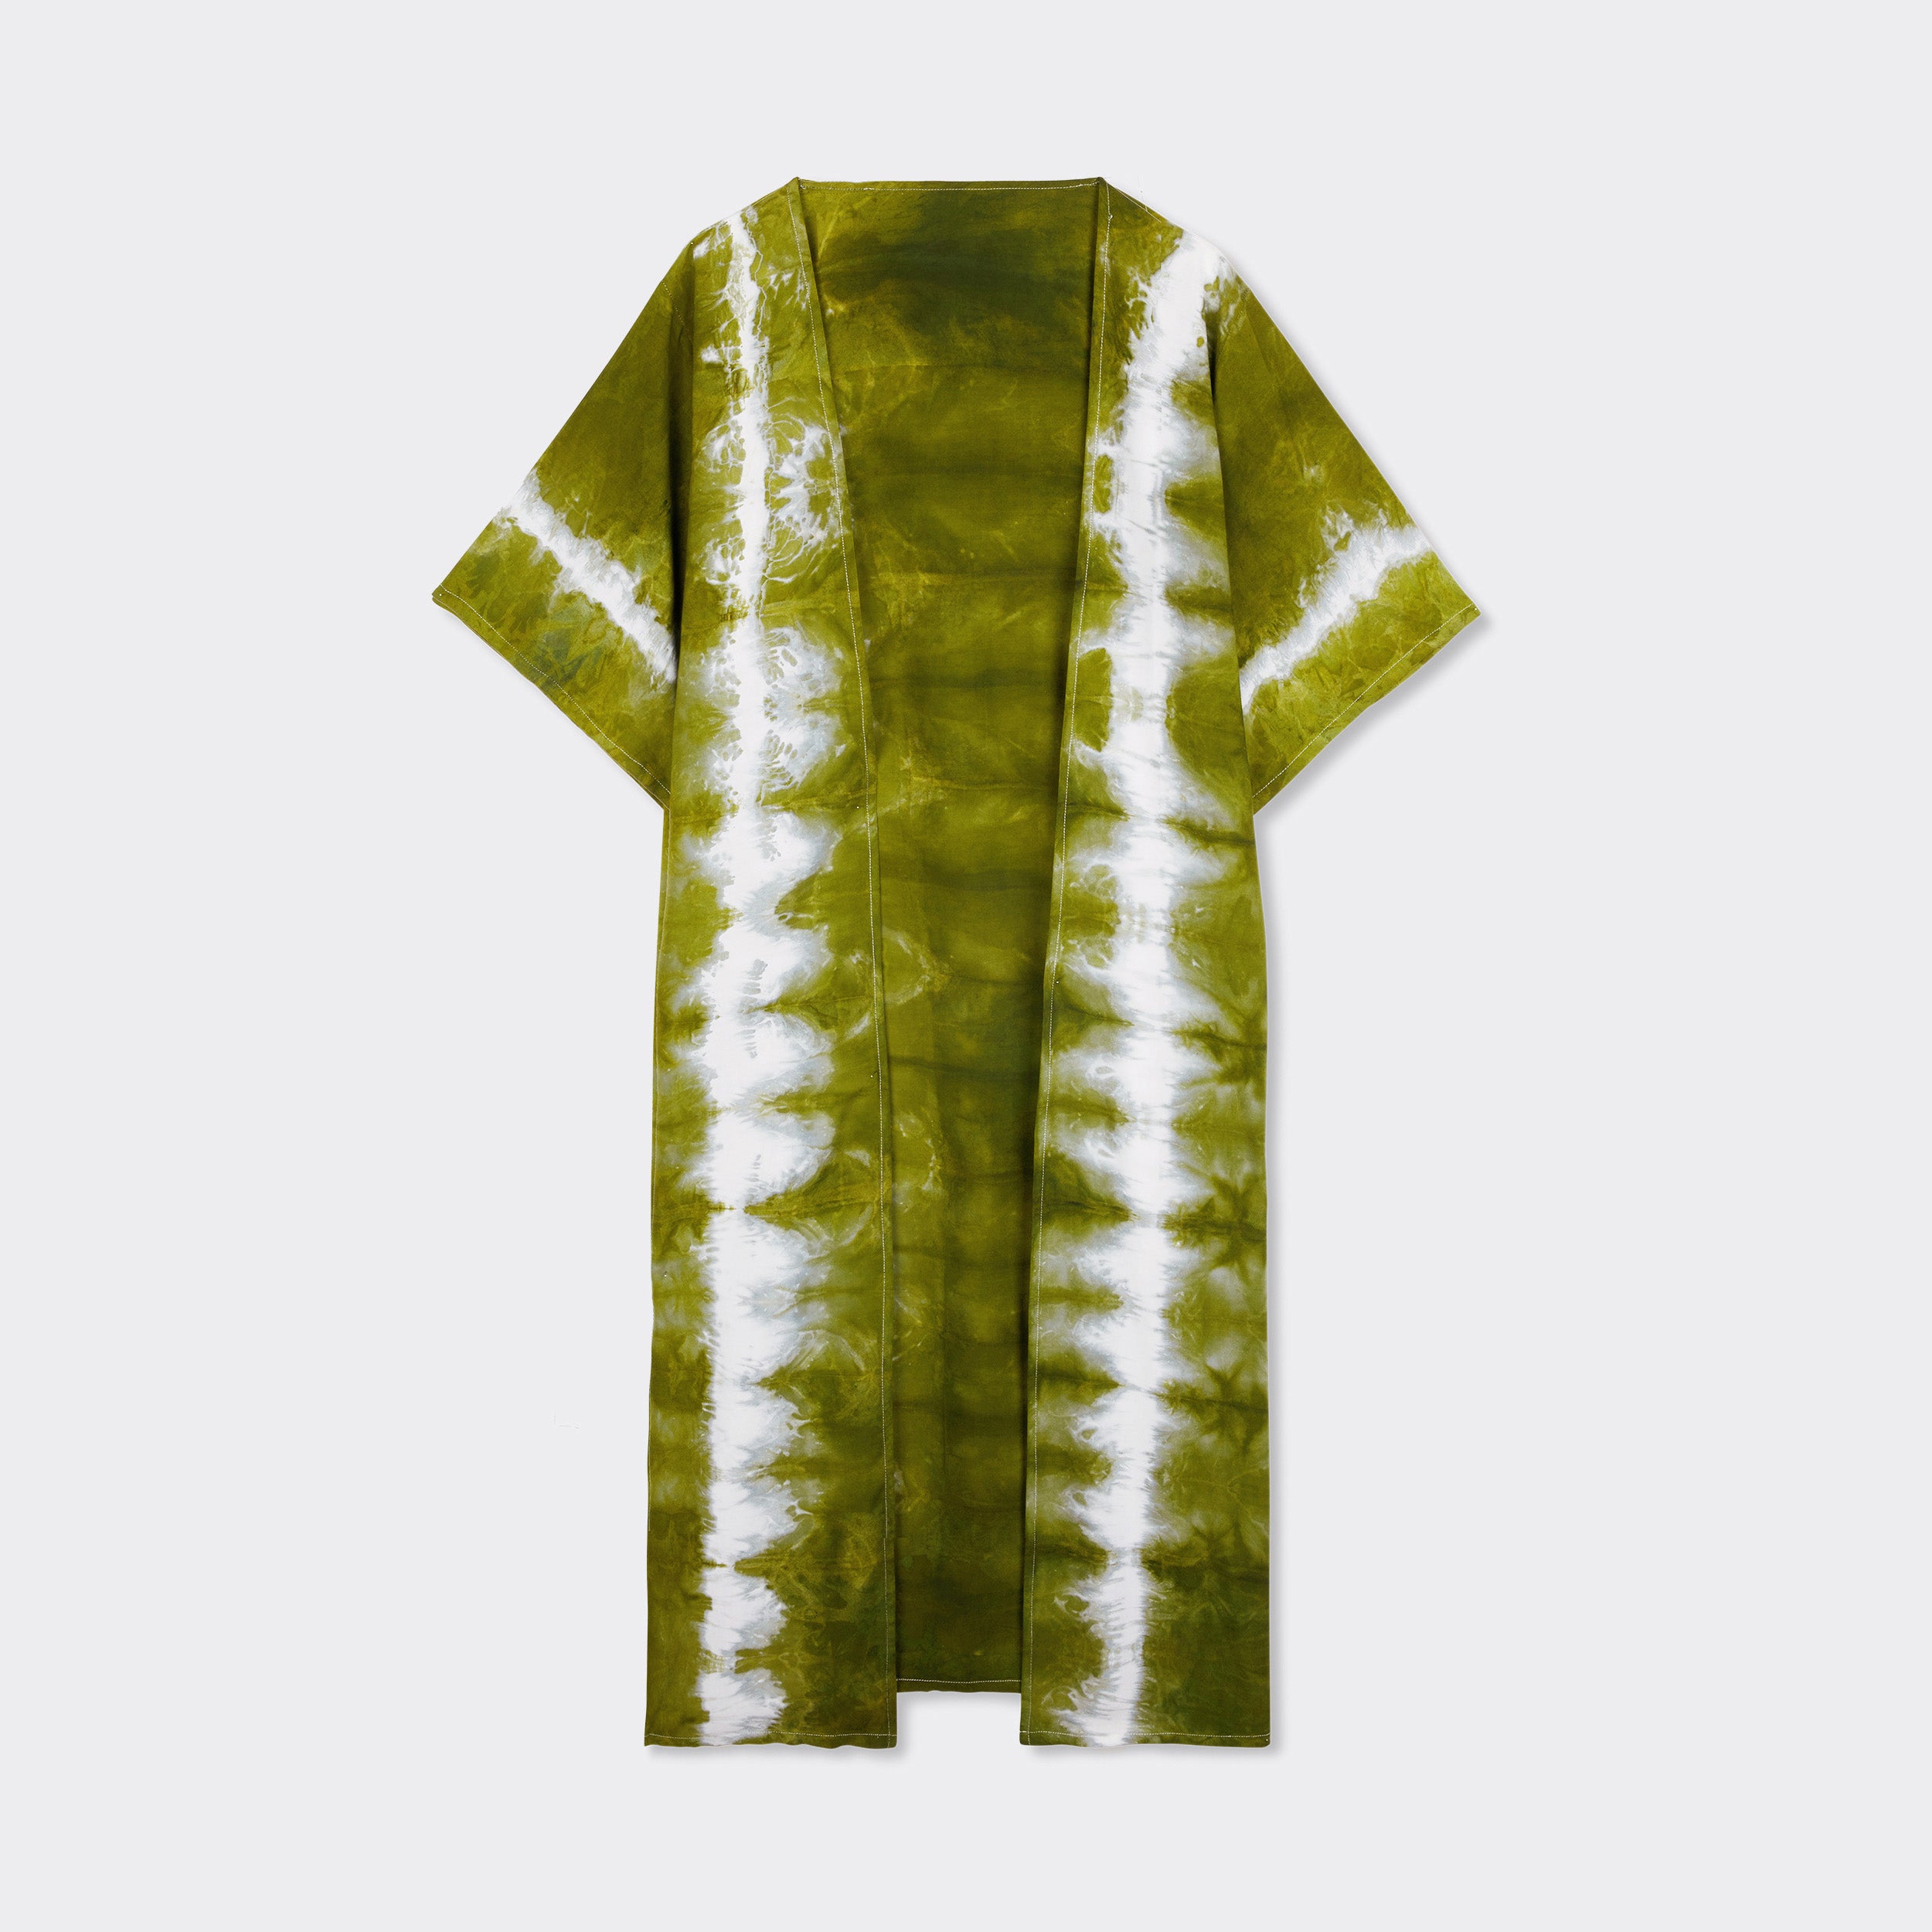 Still life: Kimono in Tie Dye Intense Green